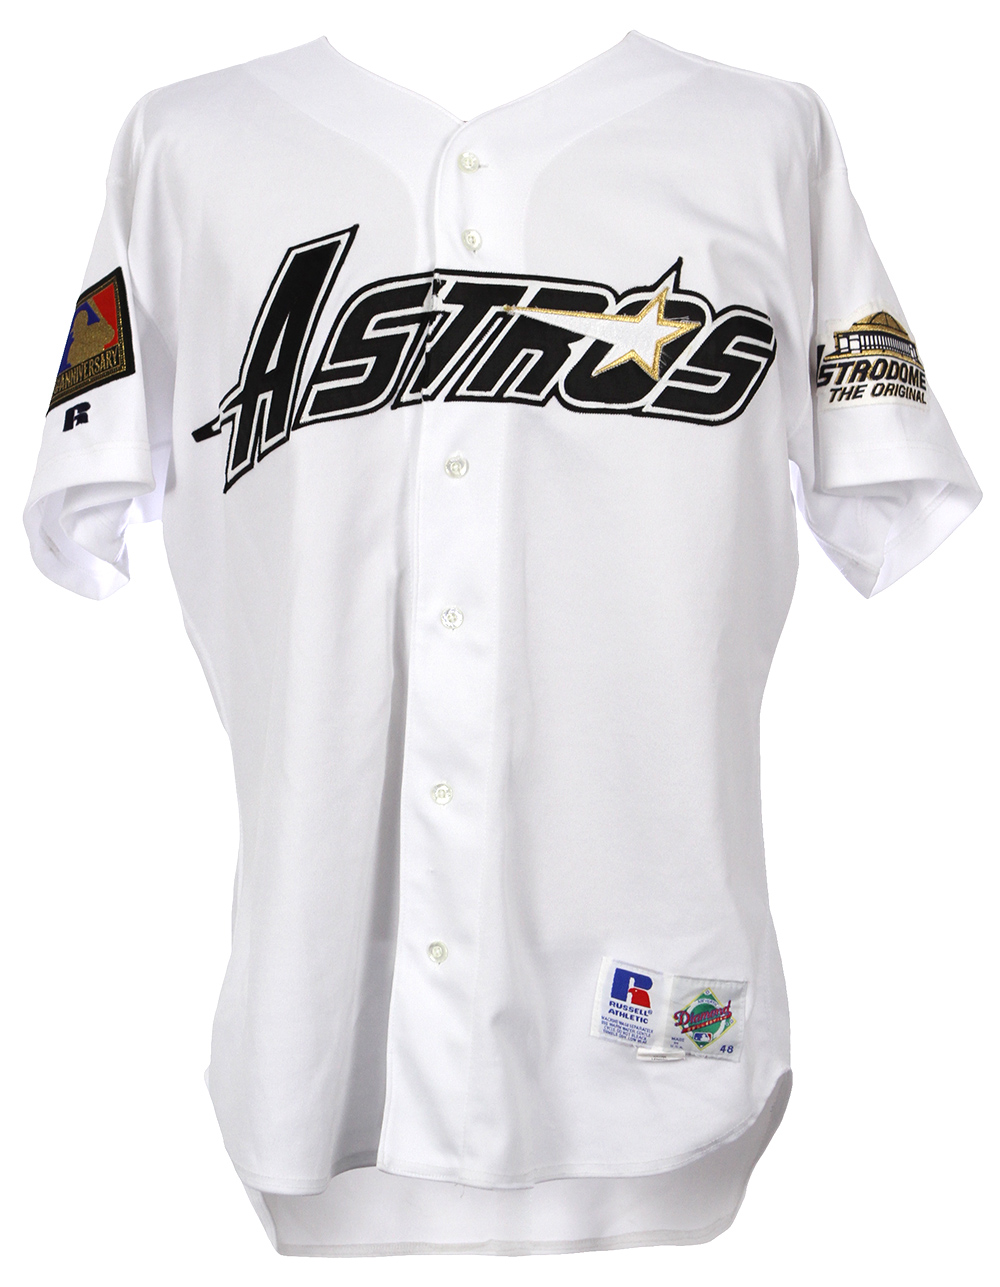 astros 1994 jersey